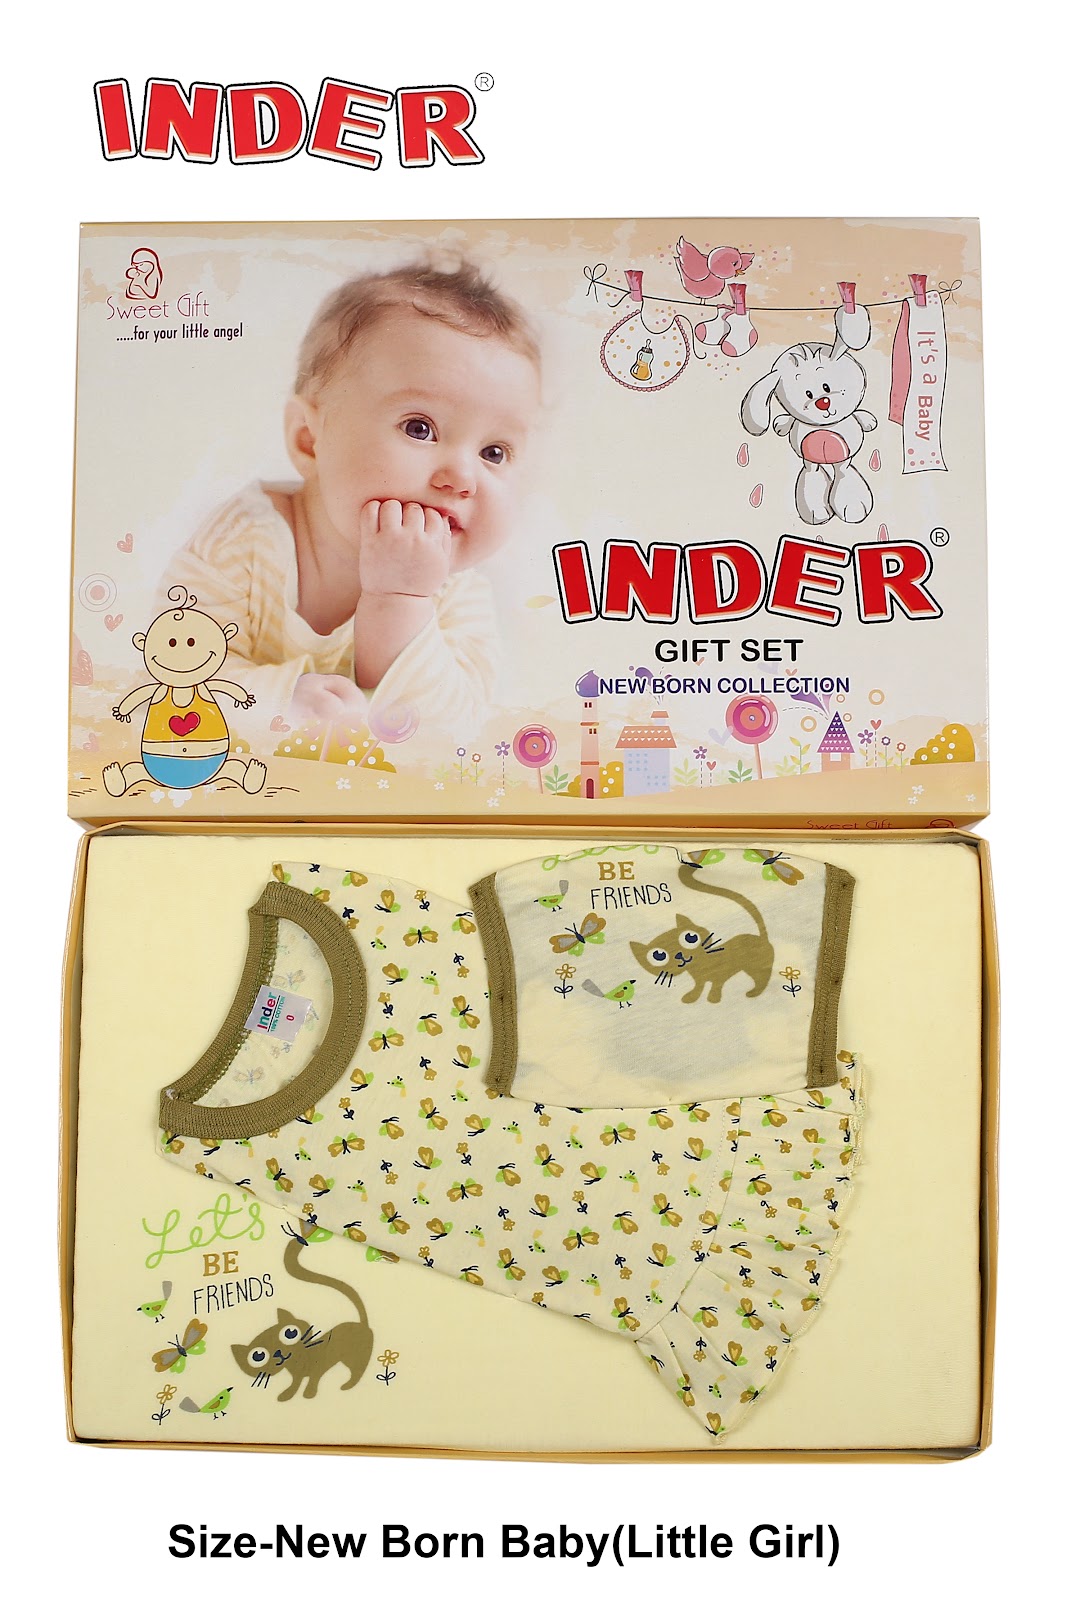 Inder Gift Set For New born baby gift set